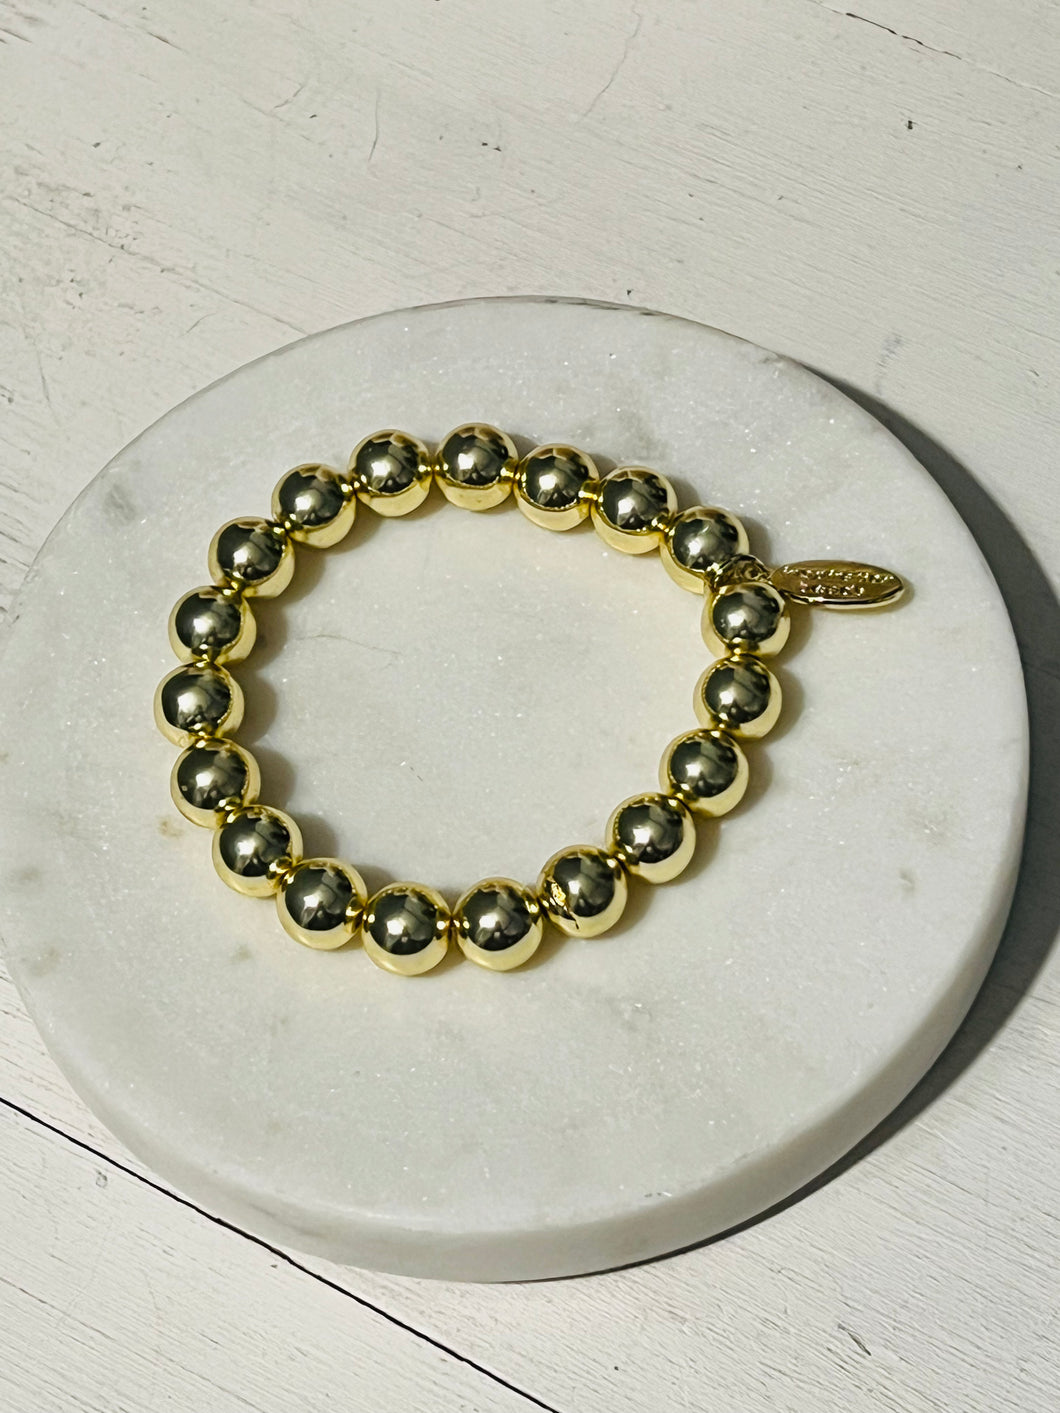 10mm 18K Gold Plated Hematite Bracelet